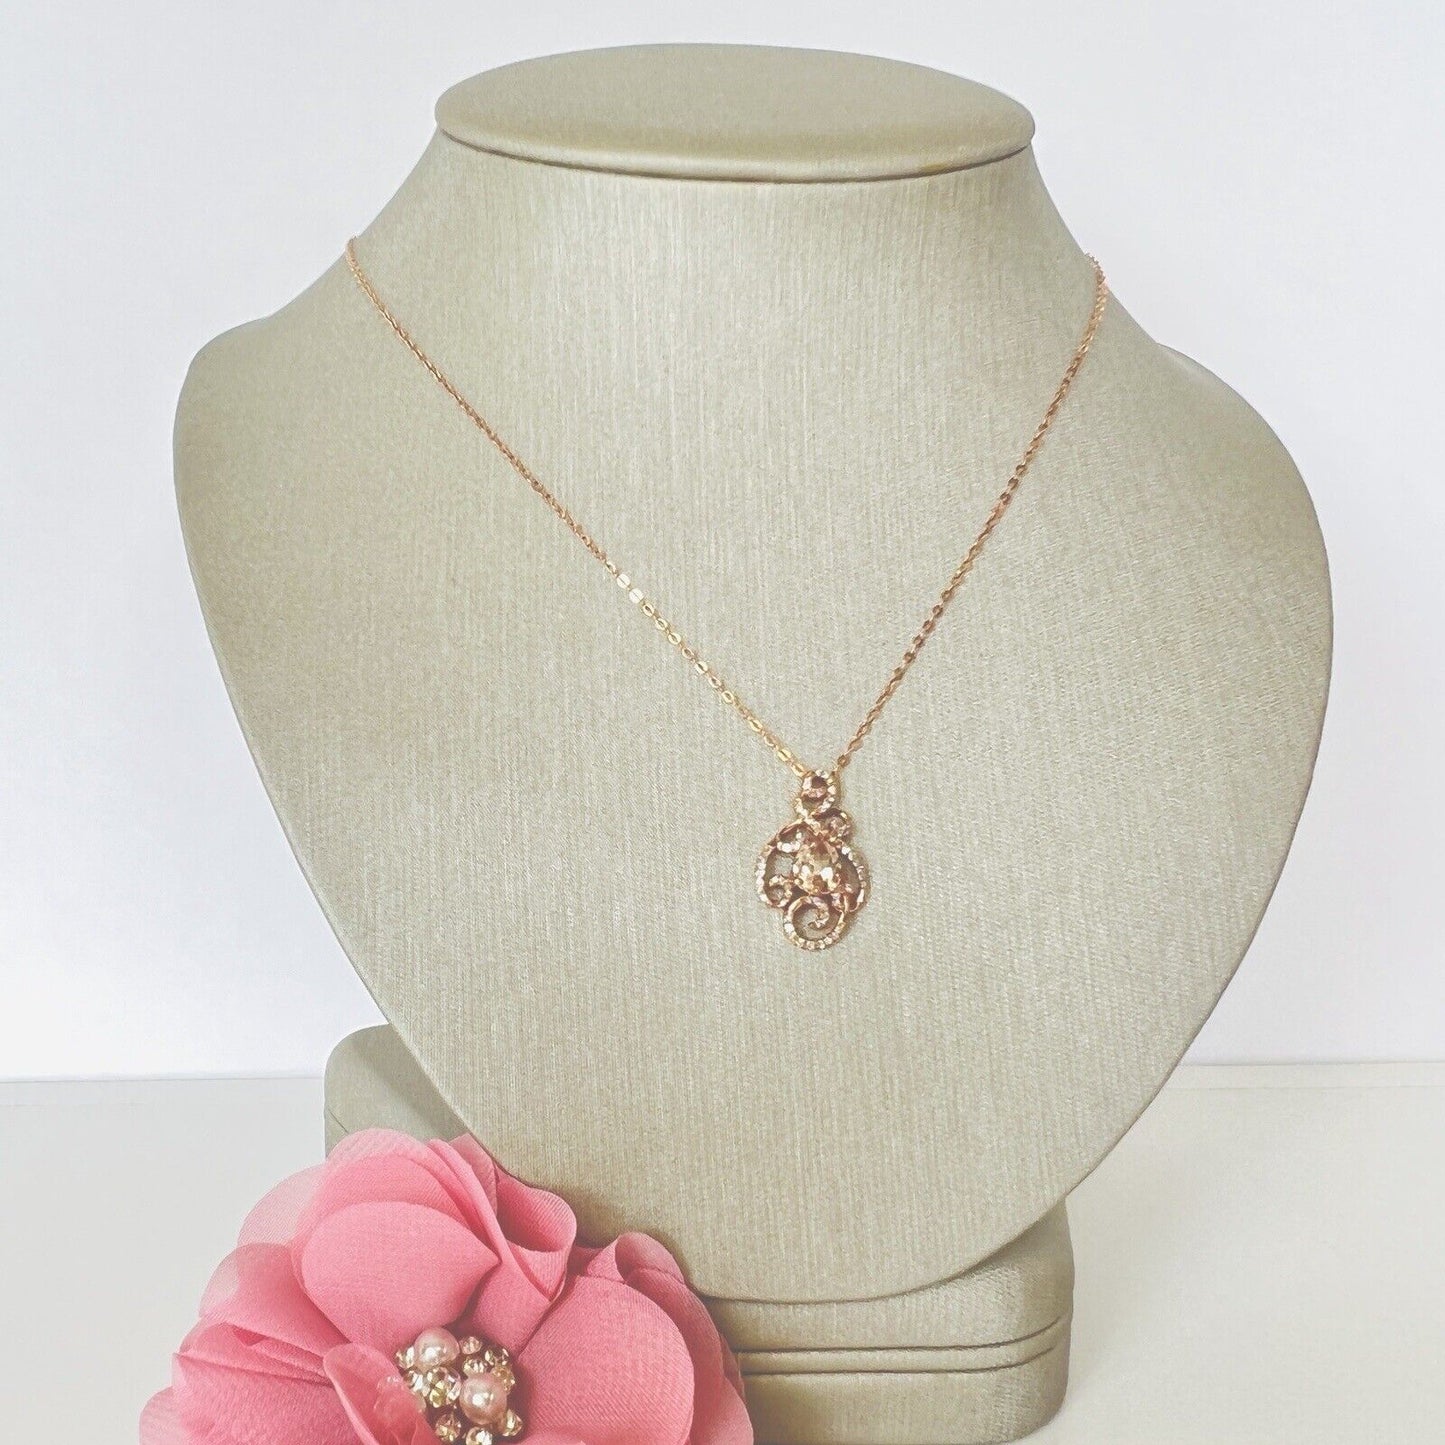 Solid 10k Rose Gold Genuine Morganite & Diamond Pendant/Necklace, New 17"